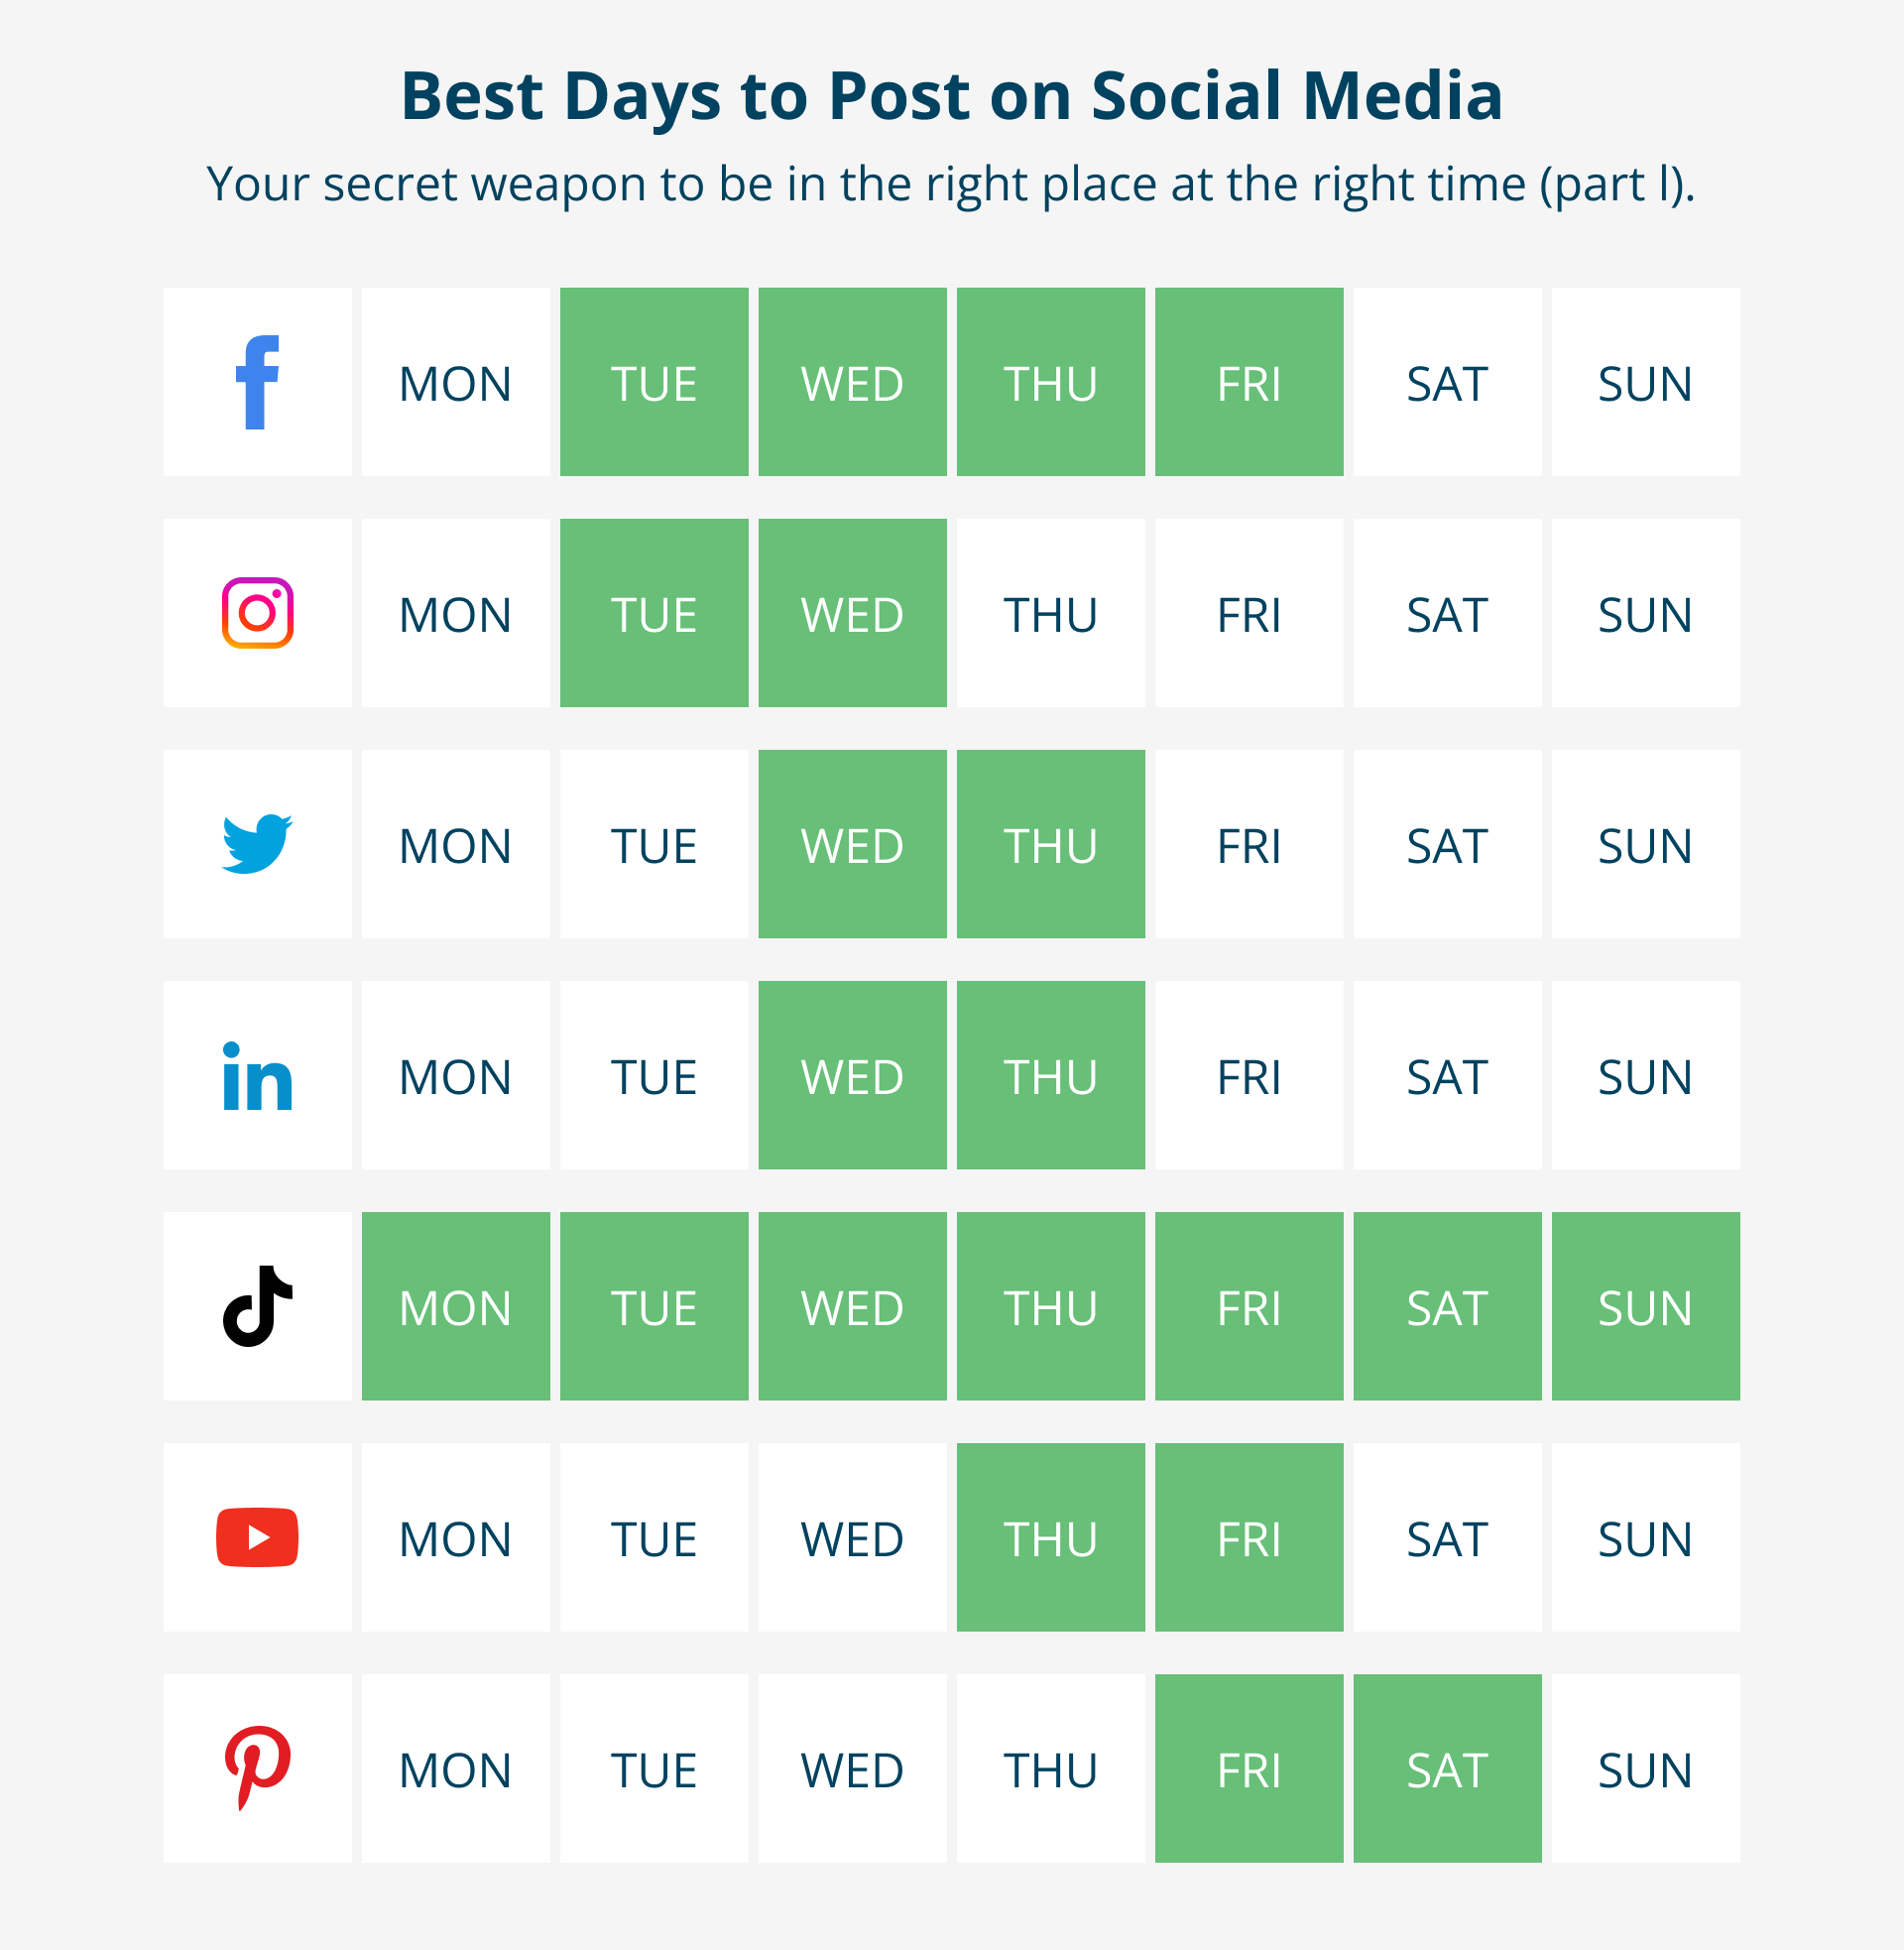 The best days to post on each social media platform